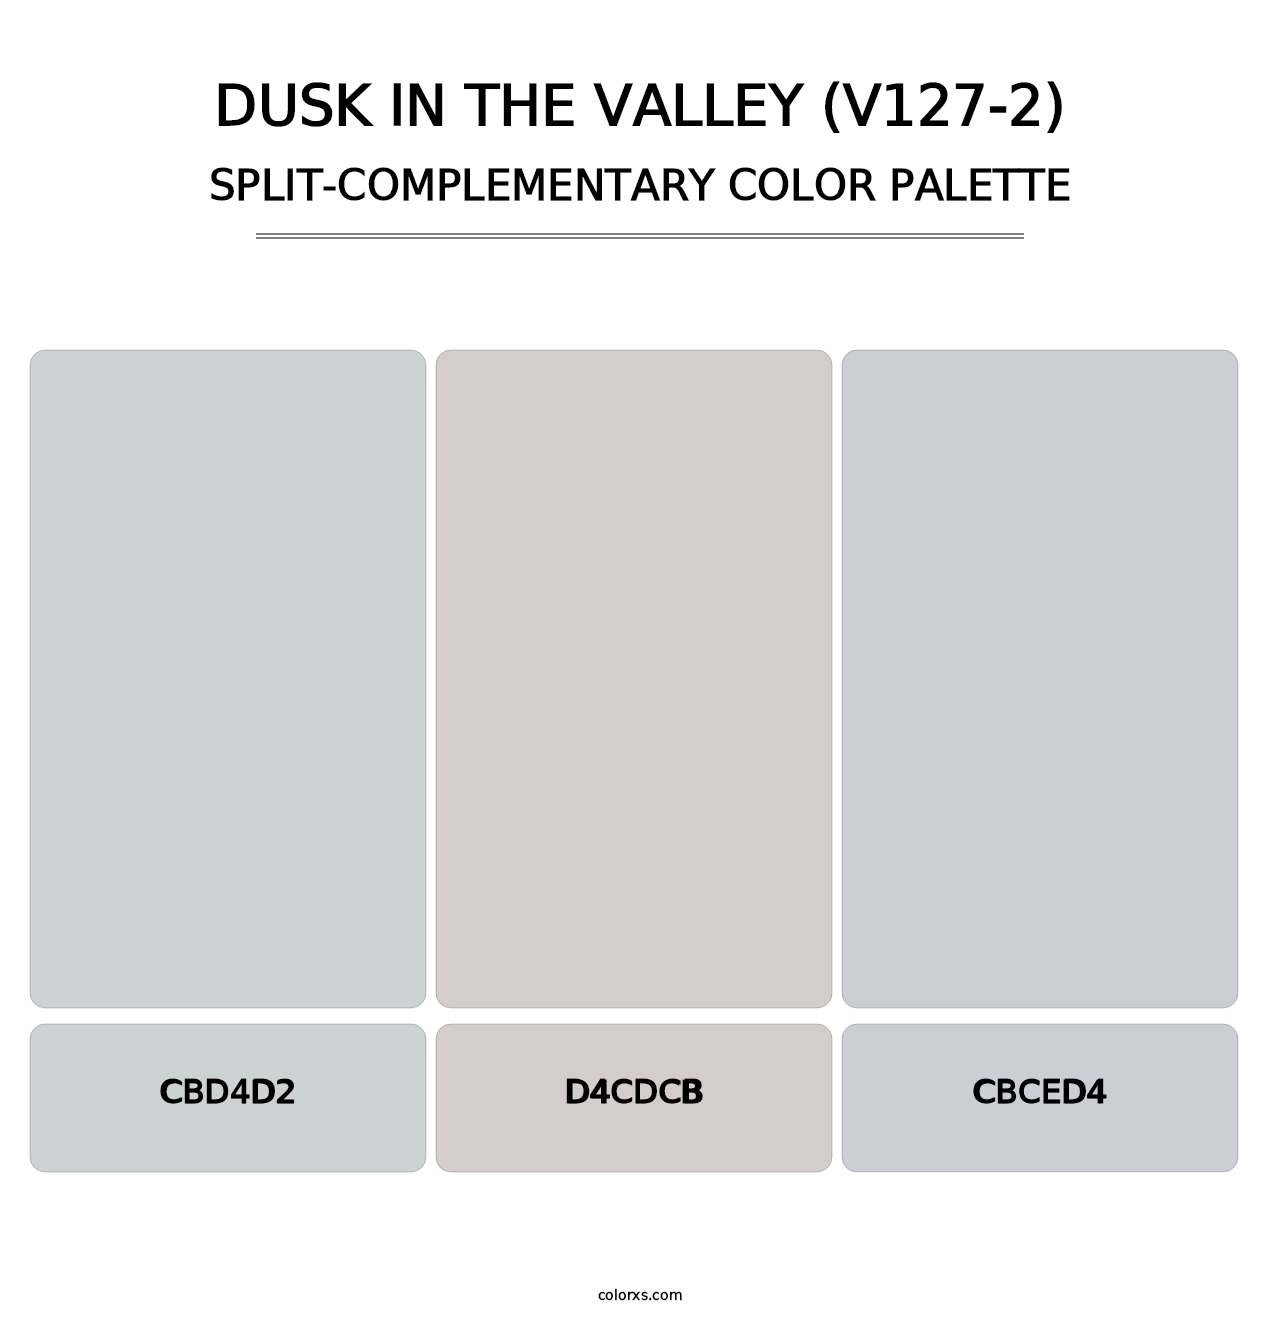 Dusk in the Valley (V127-2) - Split-Complementary Color Palette